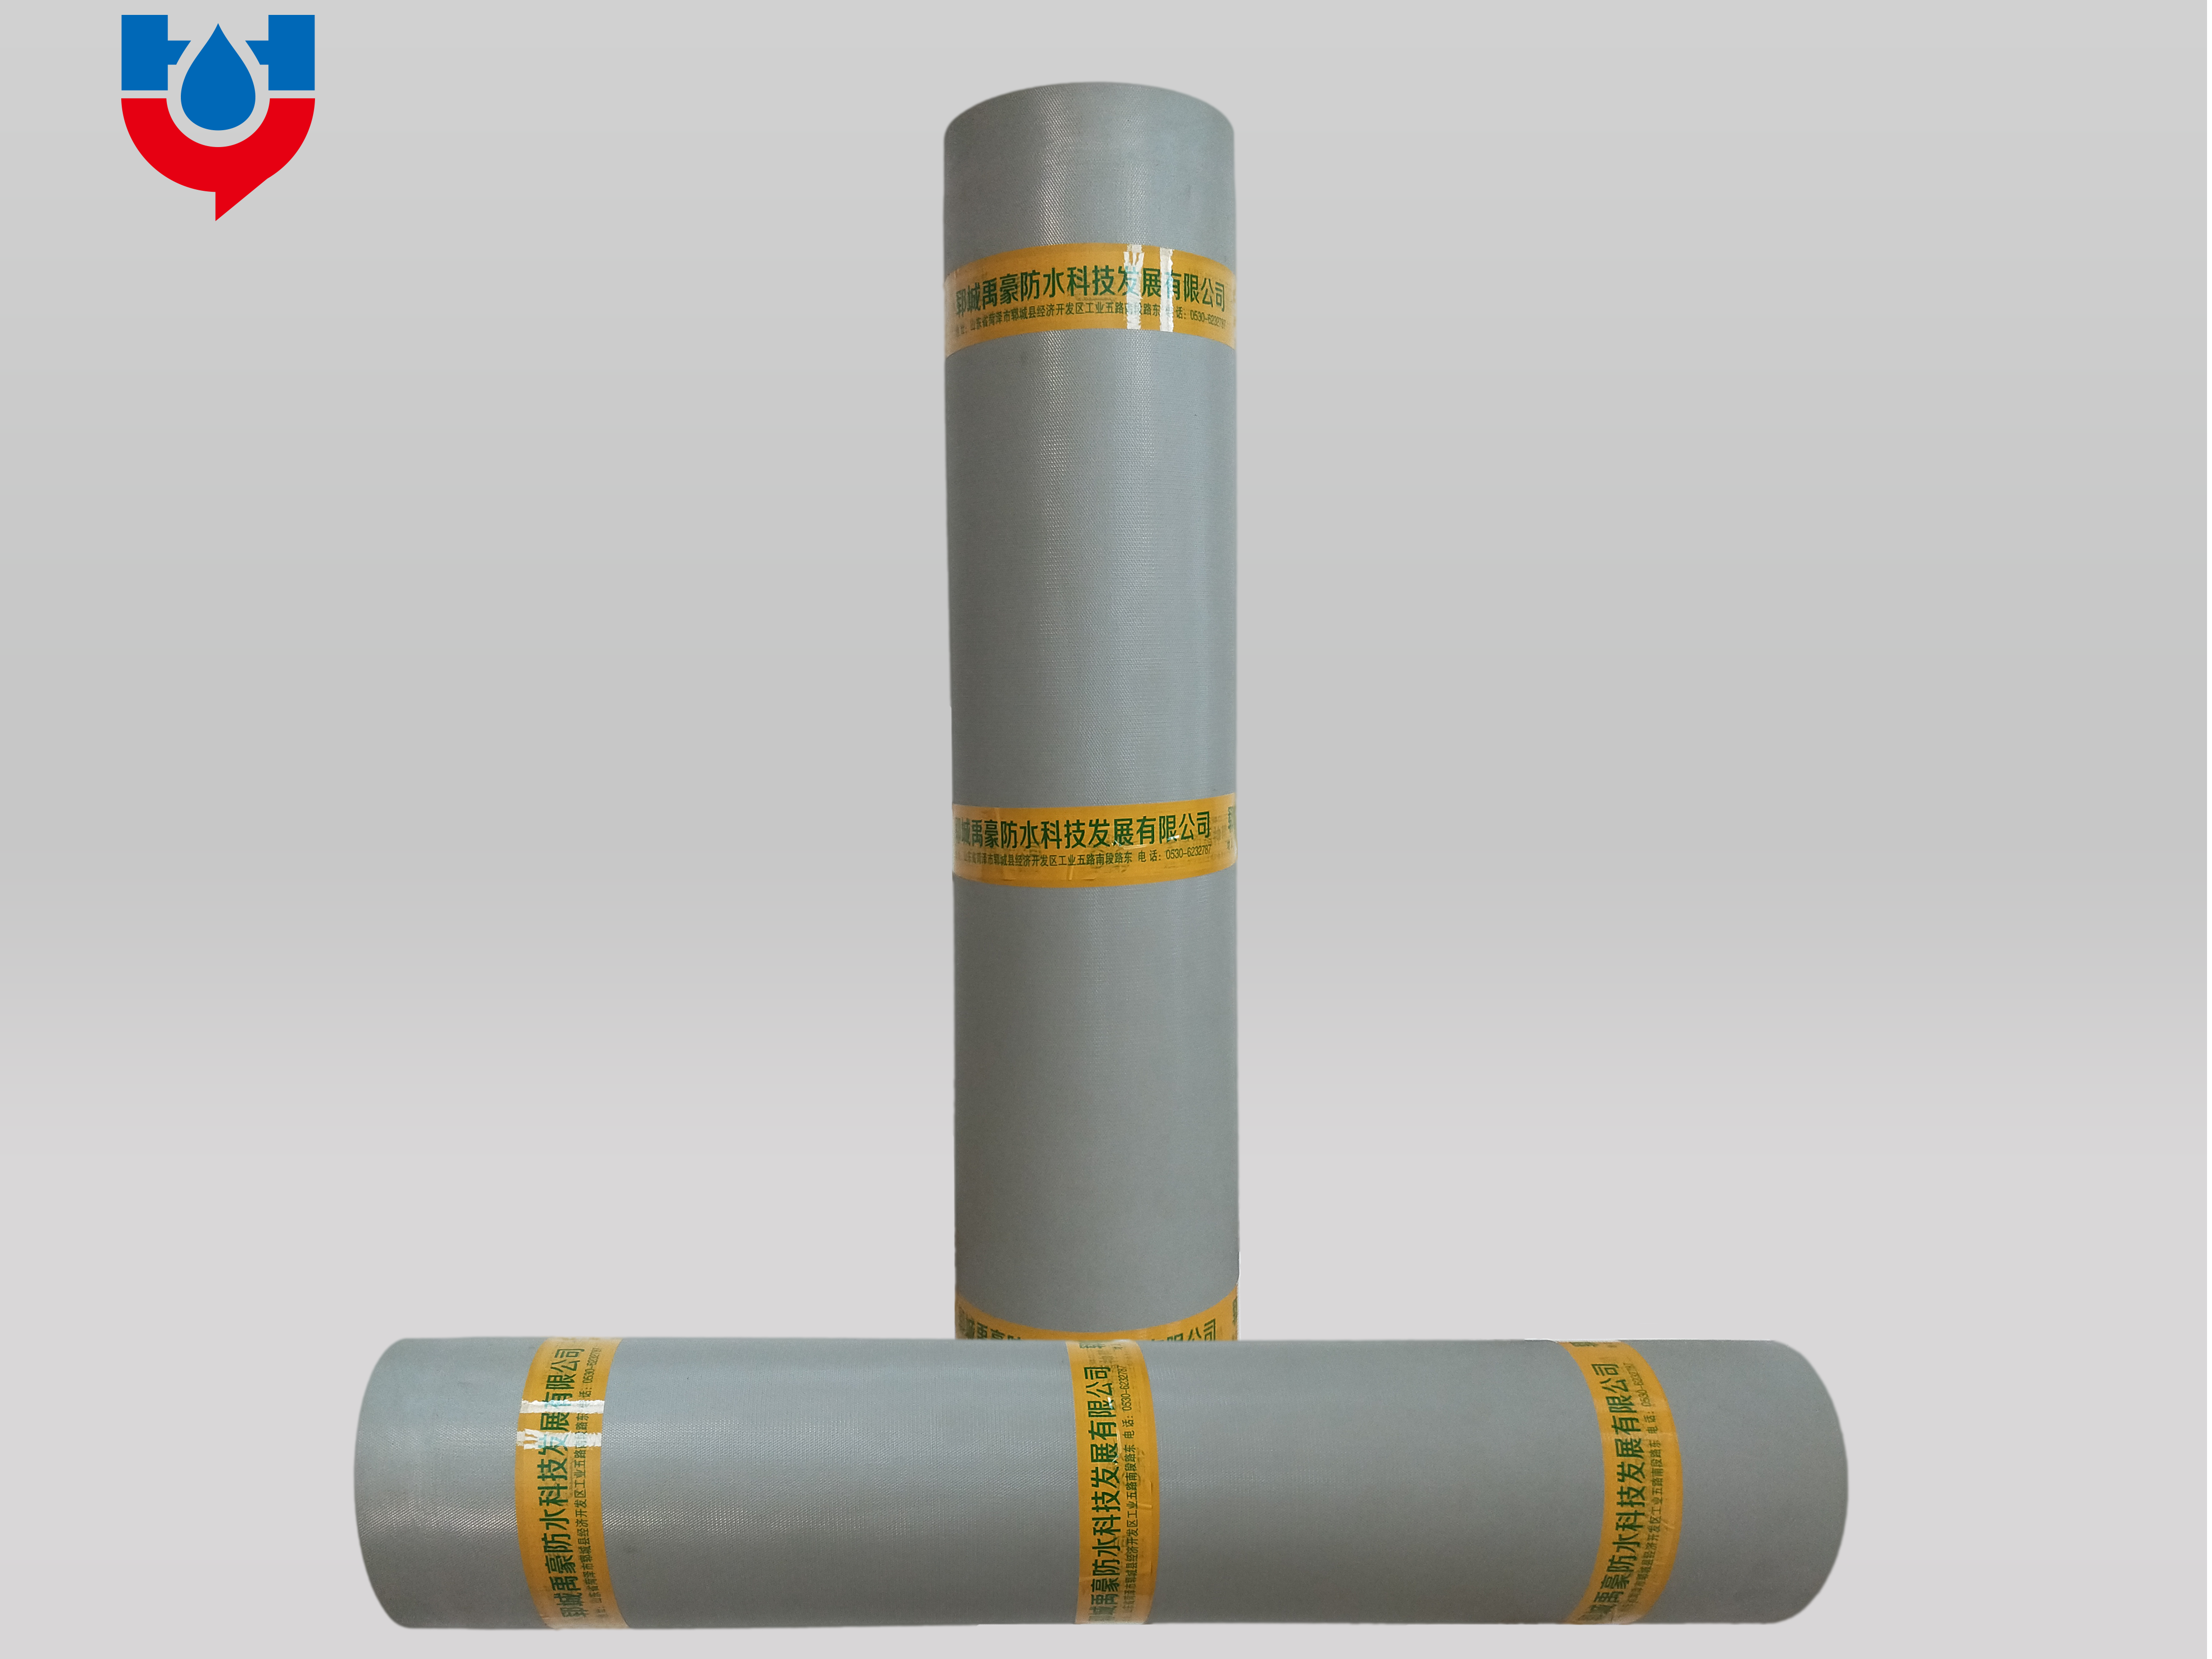 YHF elastomer (SBS) modified bitumen waterproof membrane